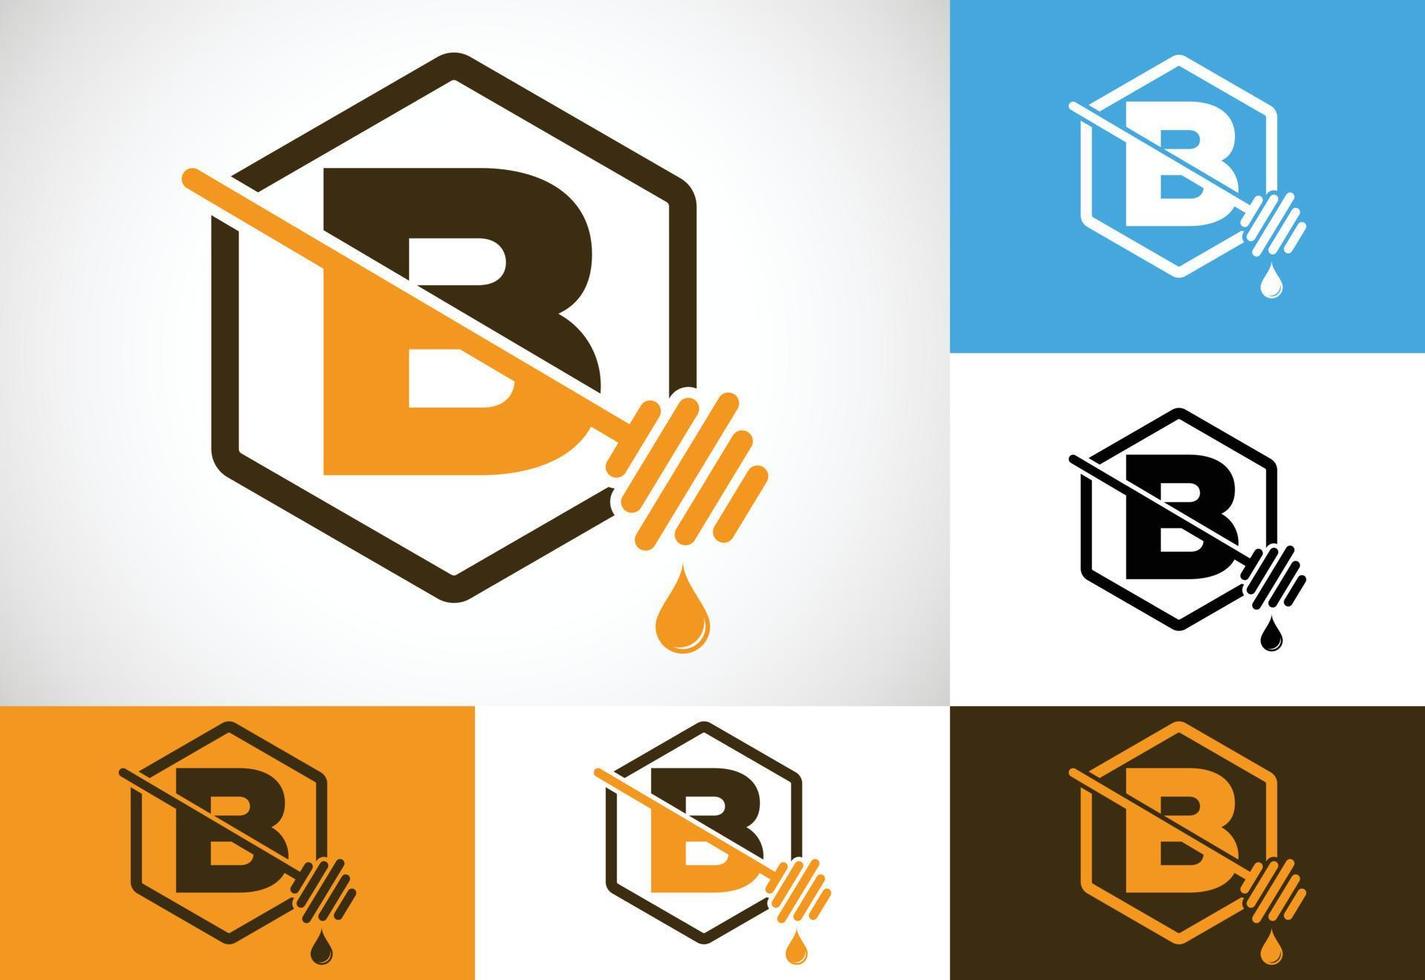 Initial letter B with honeycomb bees logo design vector illustration. Honey logo font emblem